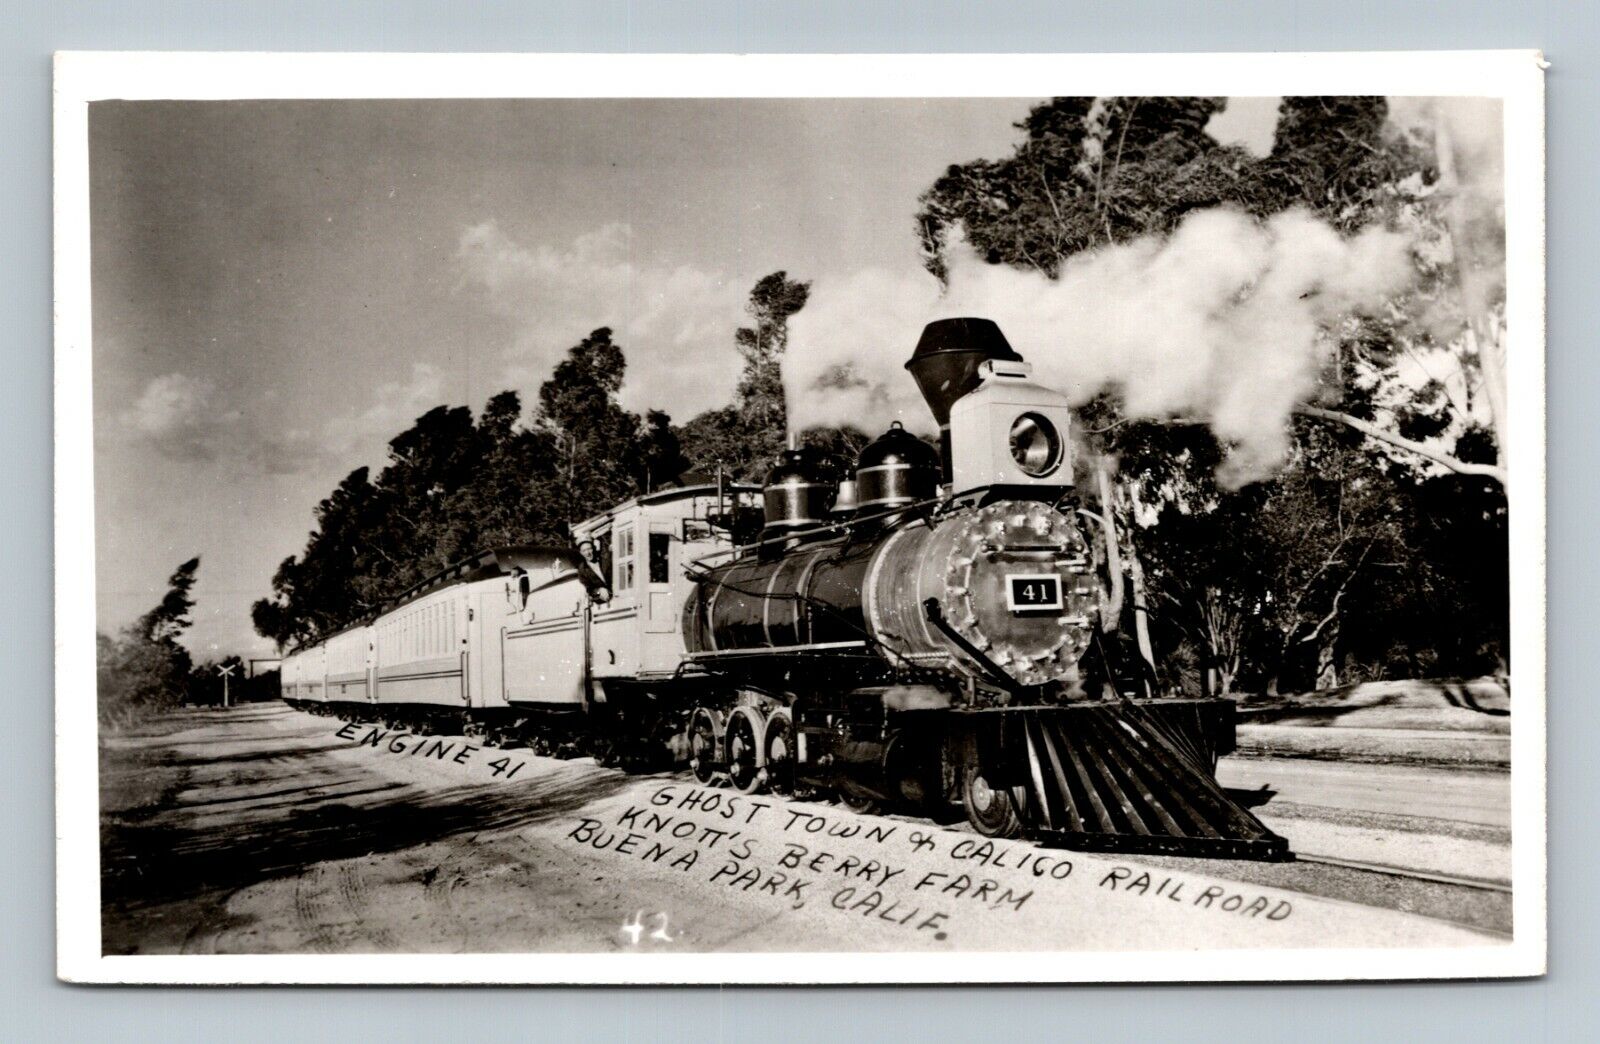 Ghost Town Calico Railroad Knott's Berry Farm Engine 41 Buena Park California